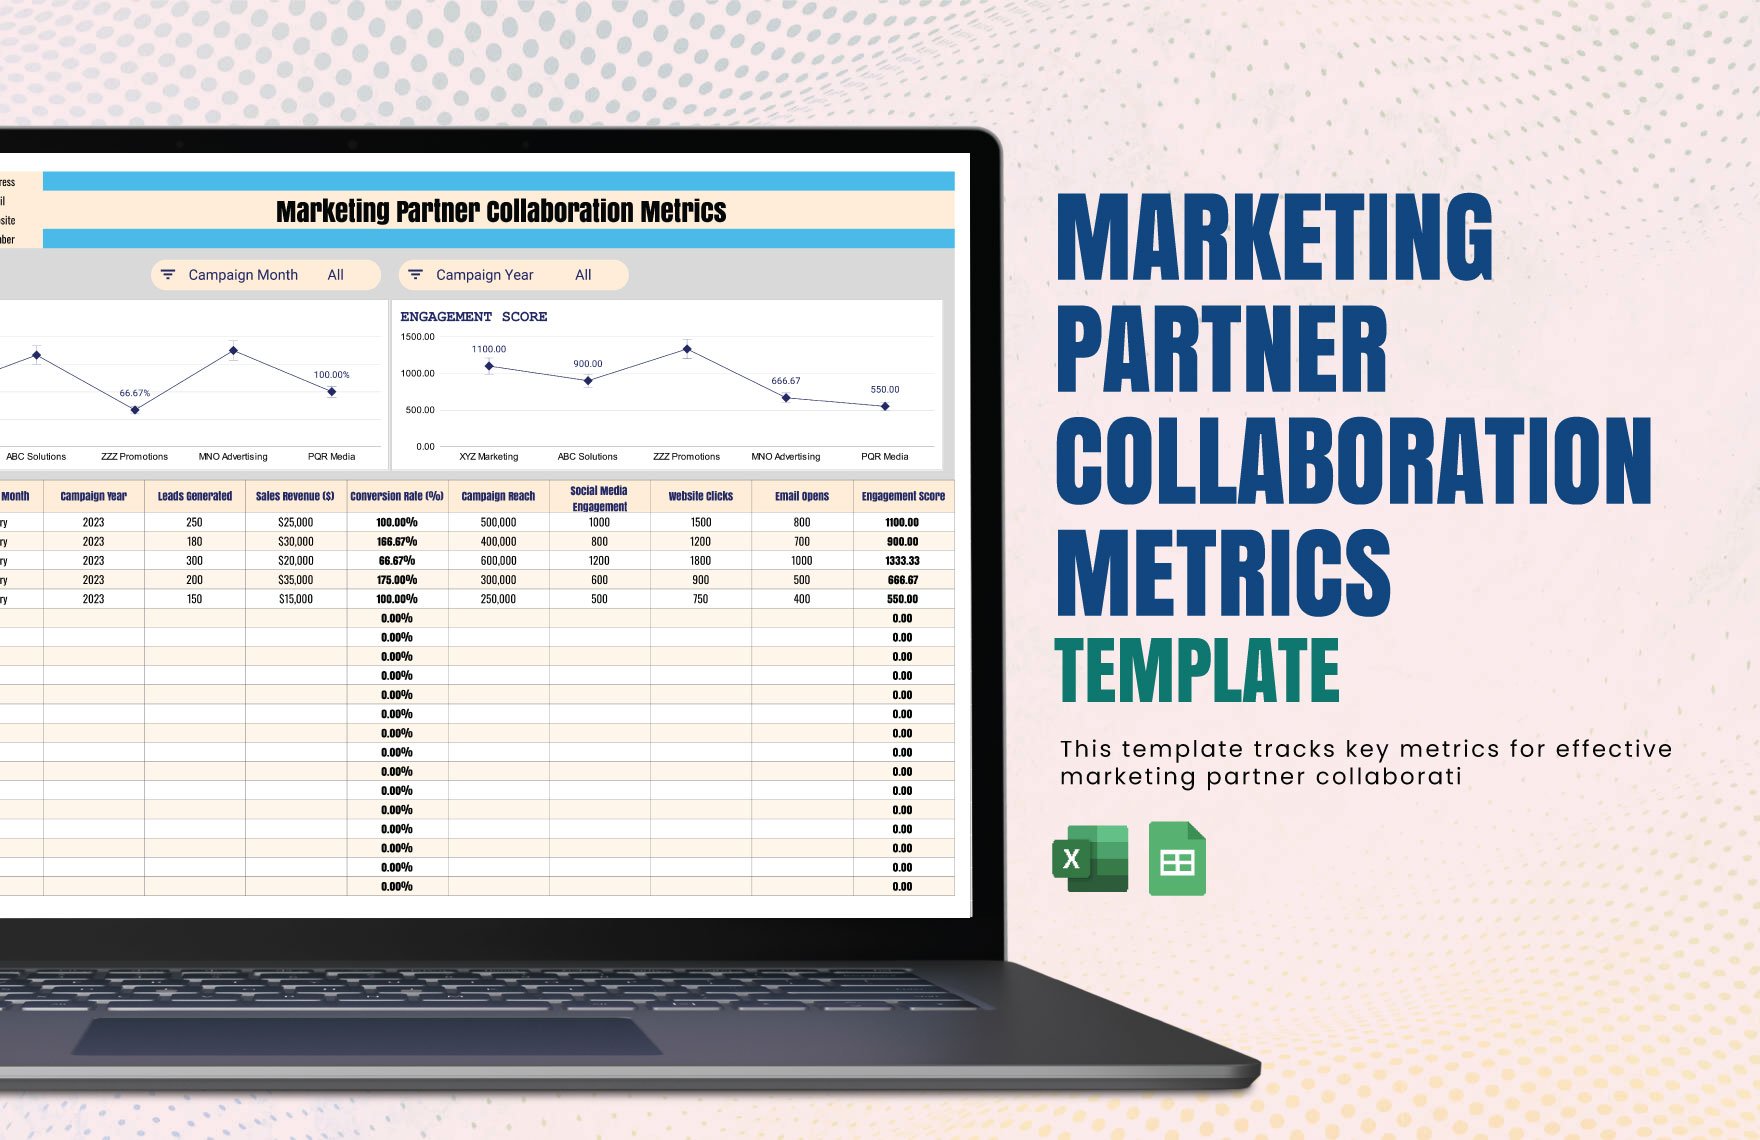 Marketing Partner Collaboration Metrics Template